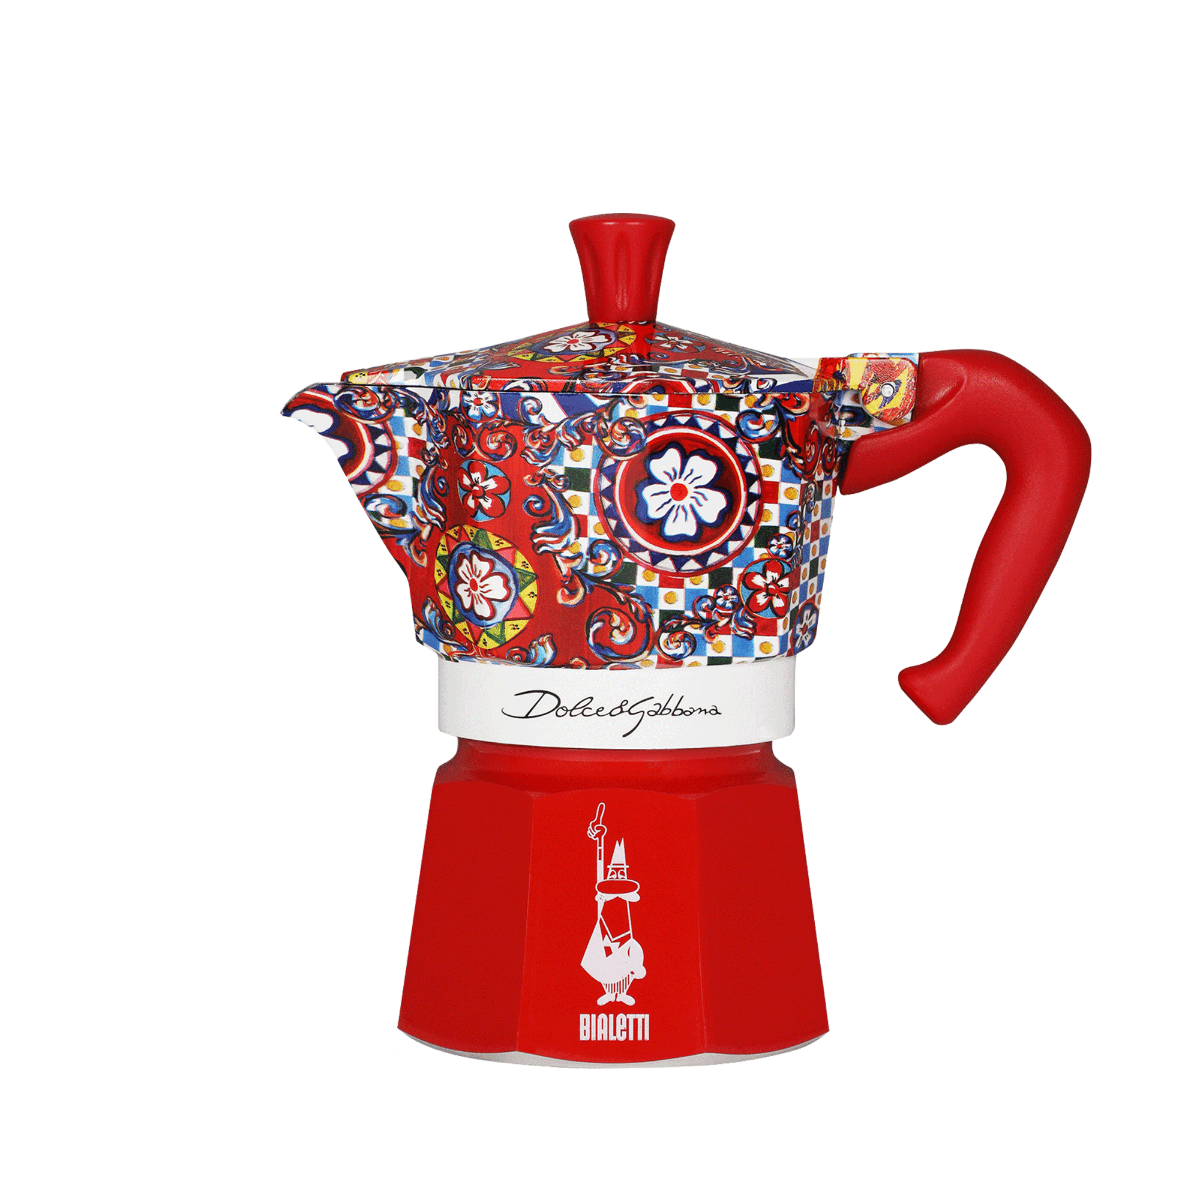 Red and green Italian Coffee Maker Moka Express 3 Cups BIALETTI